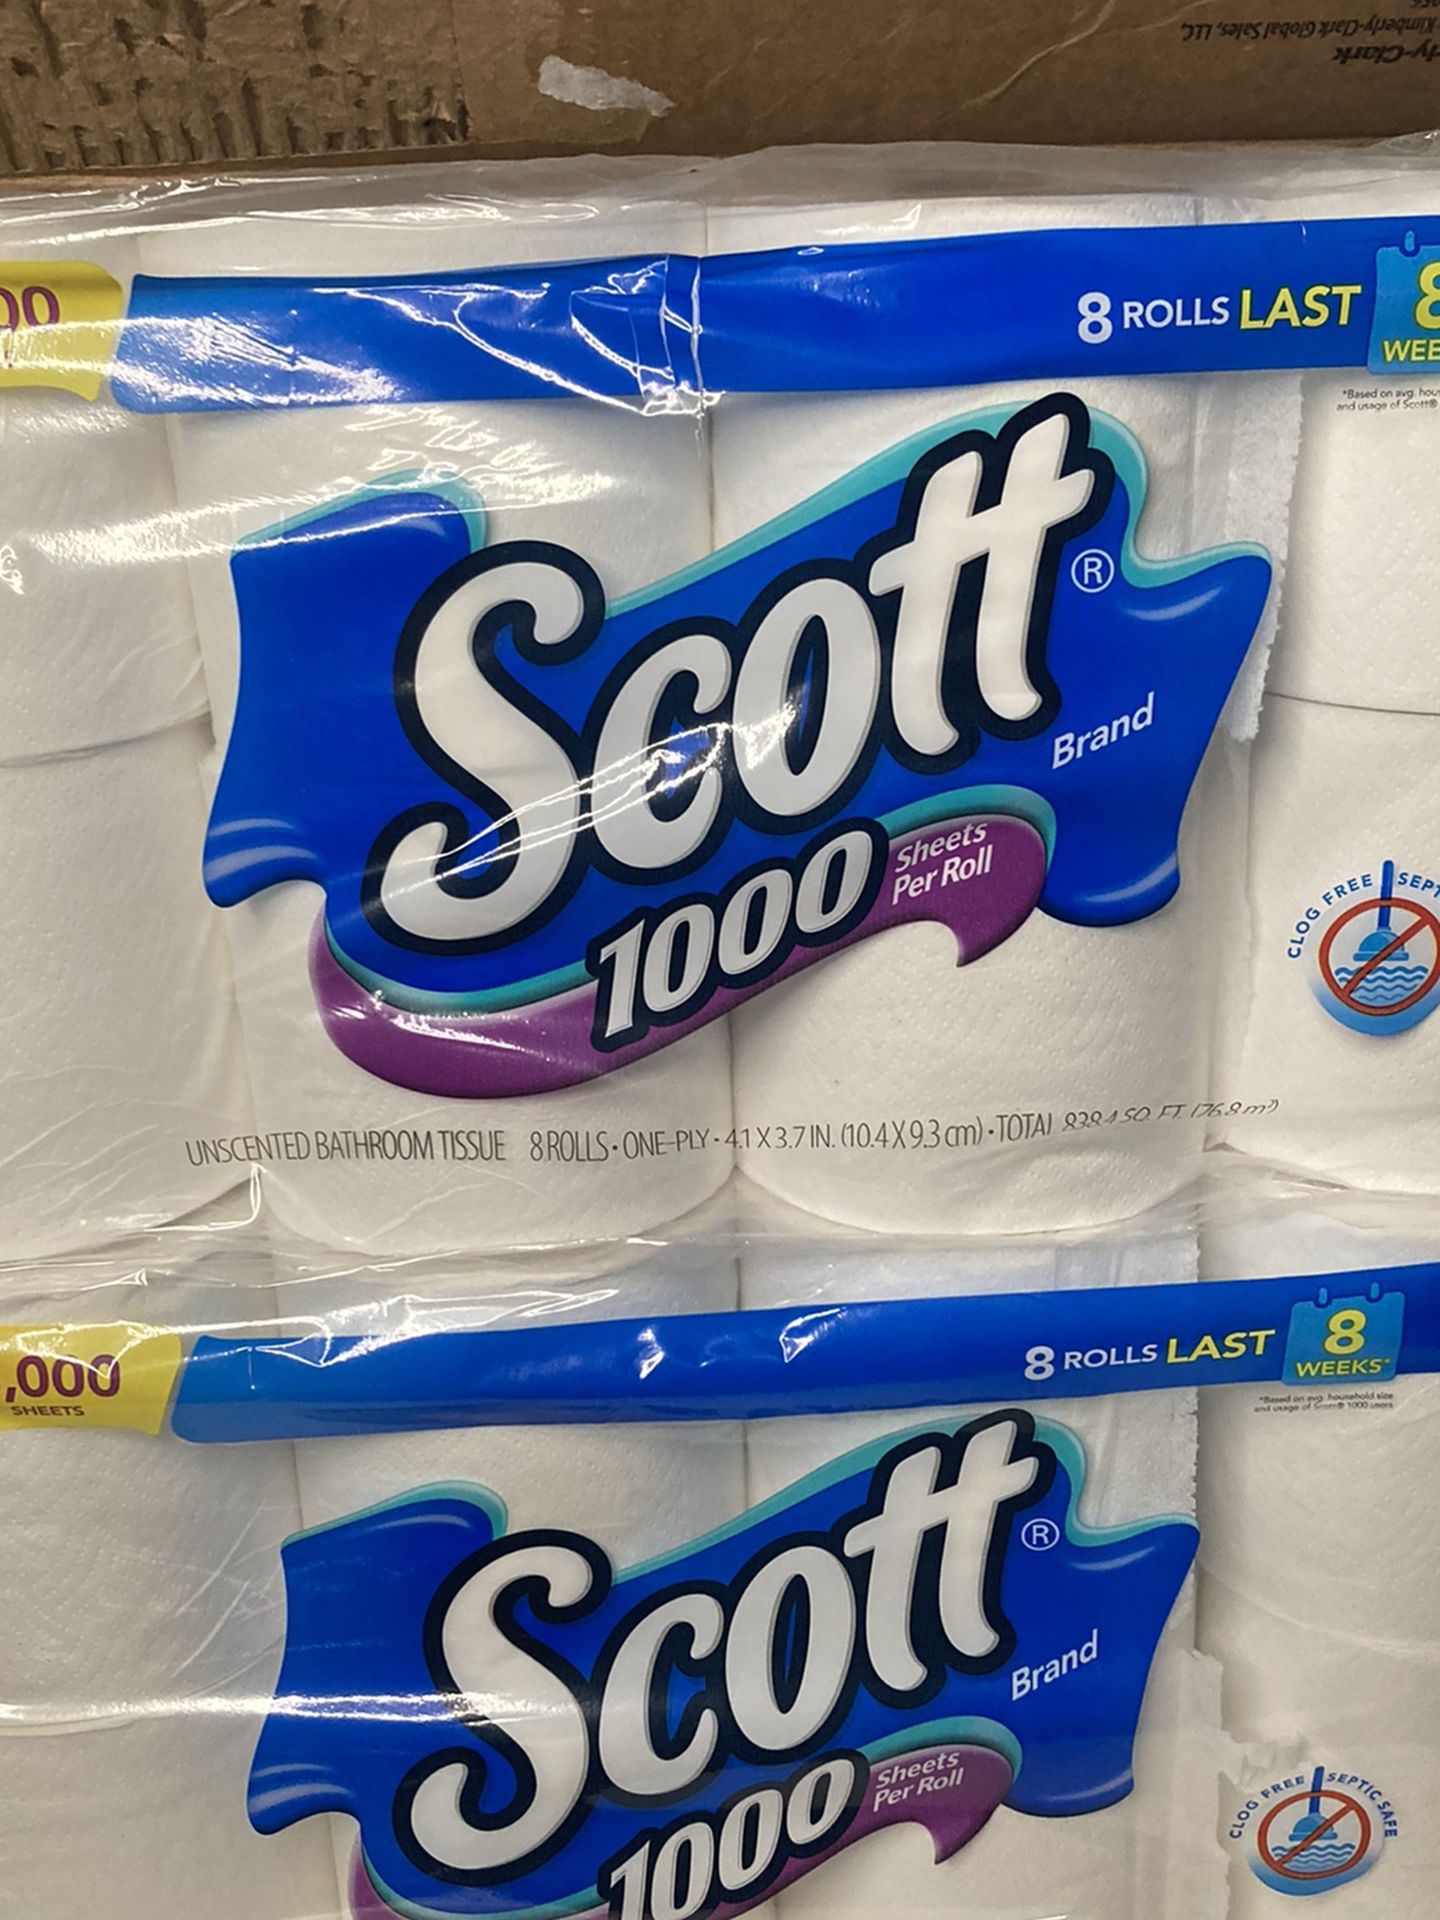 Scott 1000 Sheets Per Roll Toilet Paper, 32 Rolls (4 Packs of 8) Bath Tissue